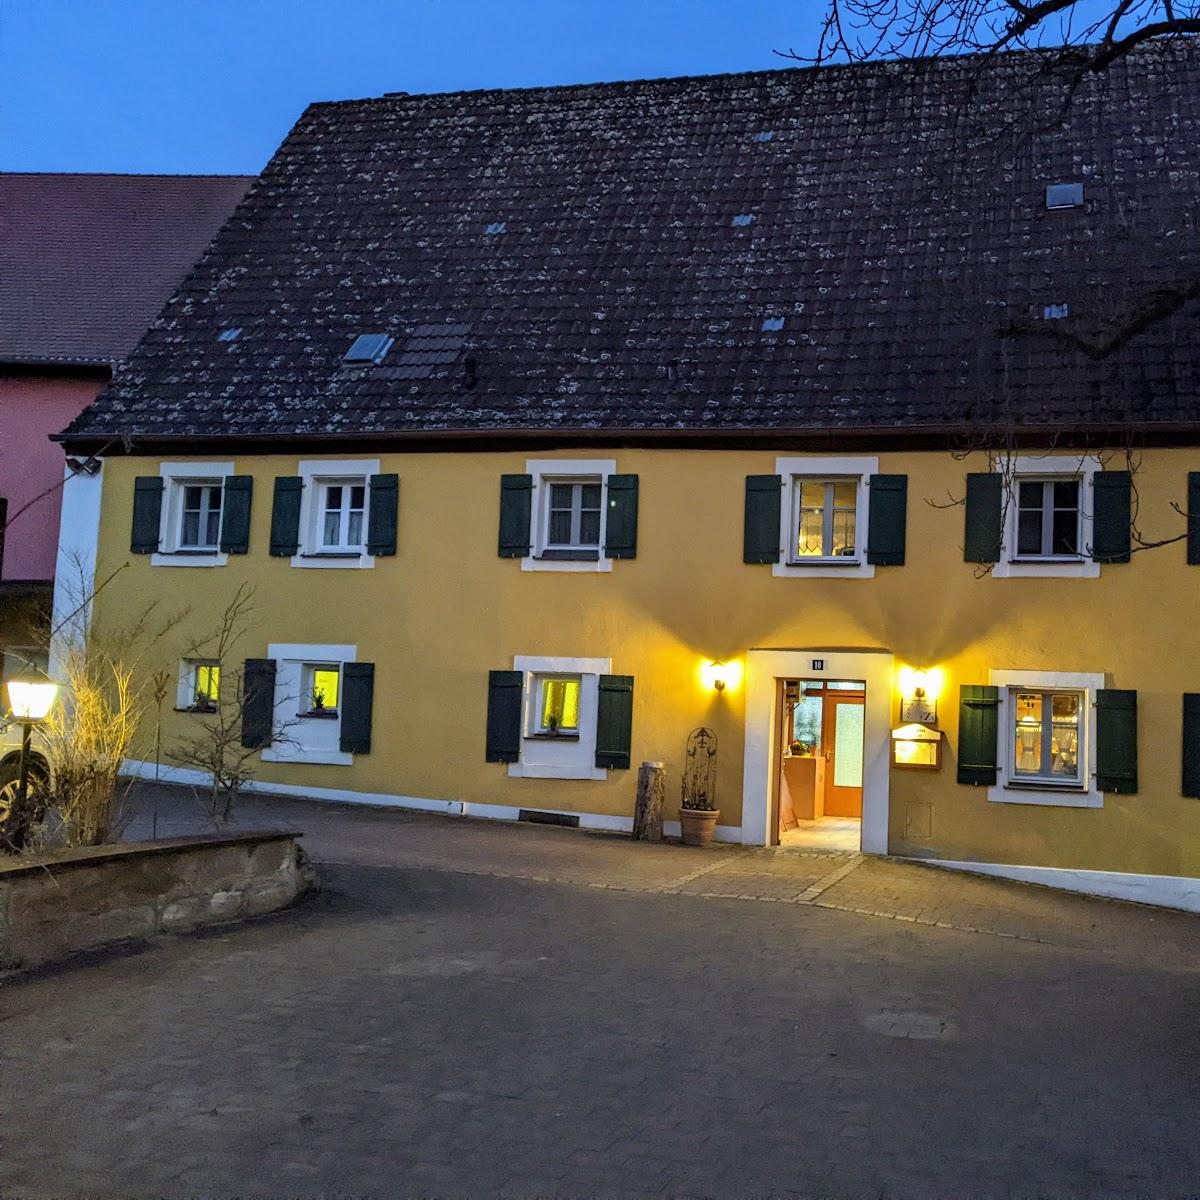 Restaurant "Landgasthof Stache" in Spalt